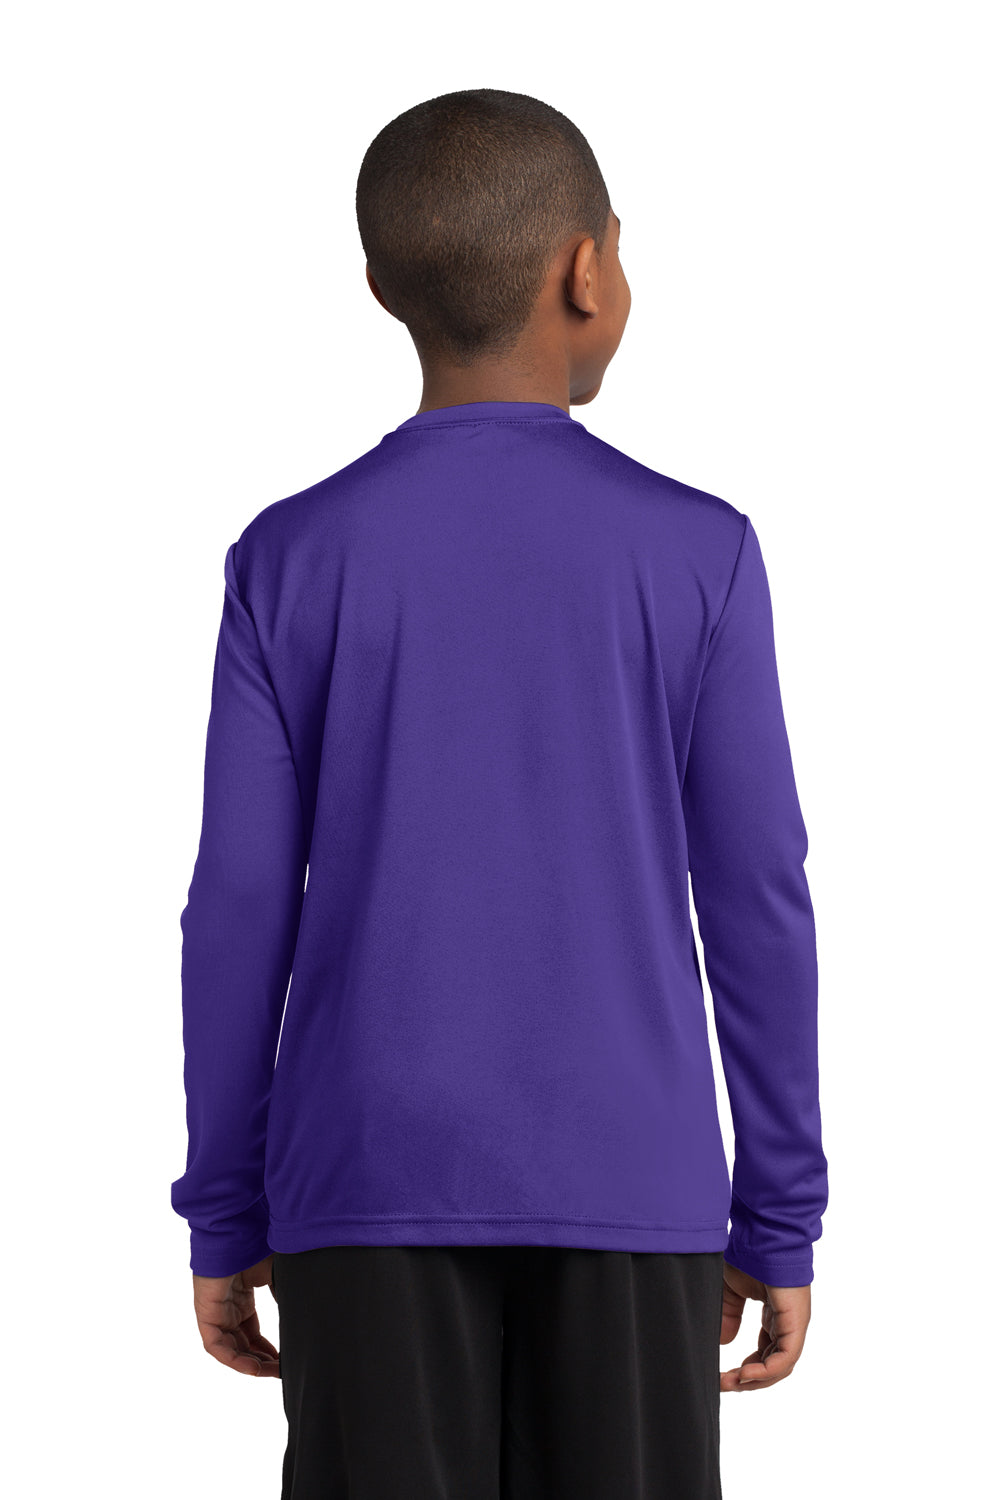 Sport-Tek YST350LS Youth Competitor Moisture Wicking Long Sleeve Crewneck T-Shirt Purple Back